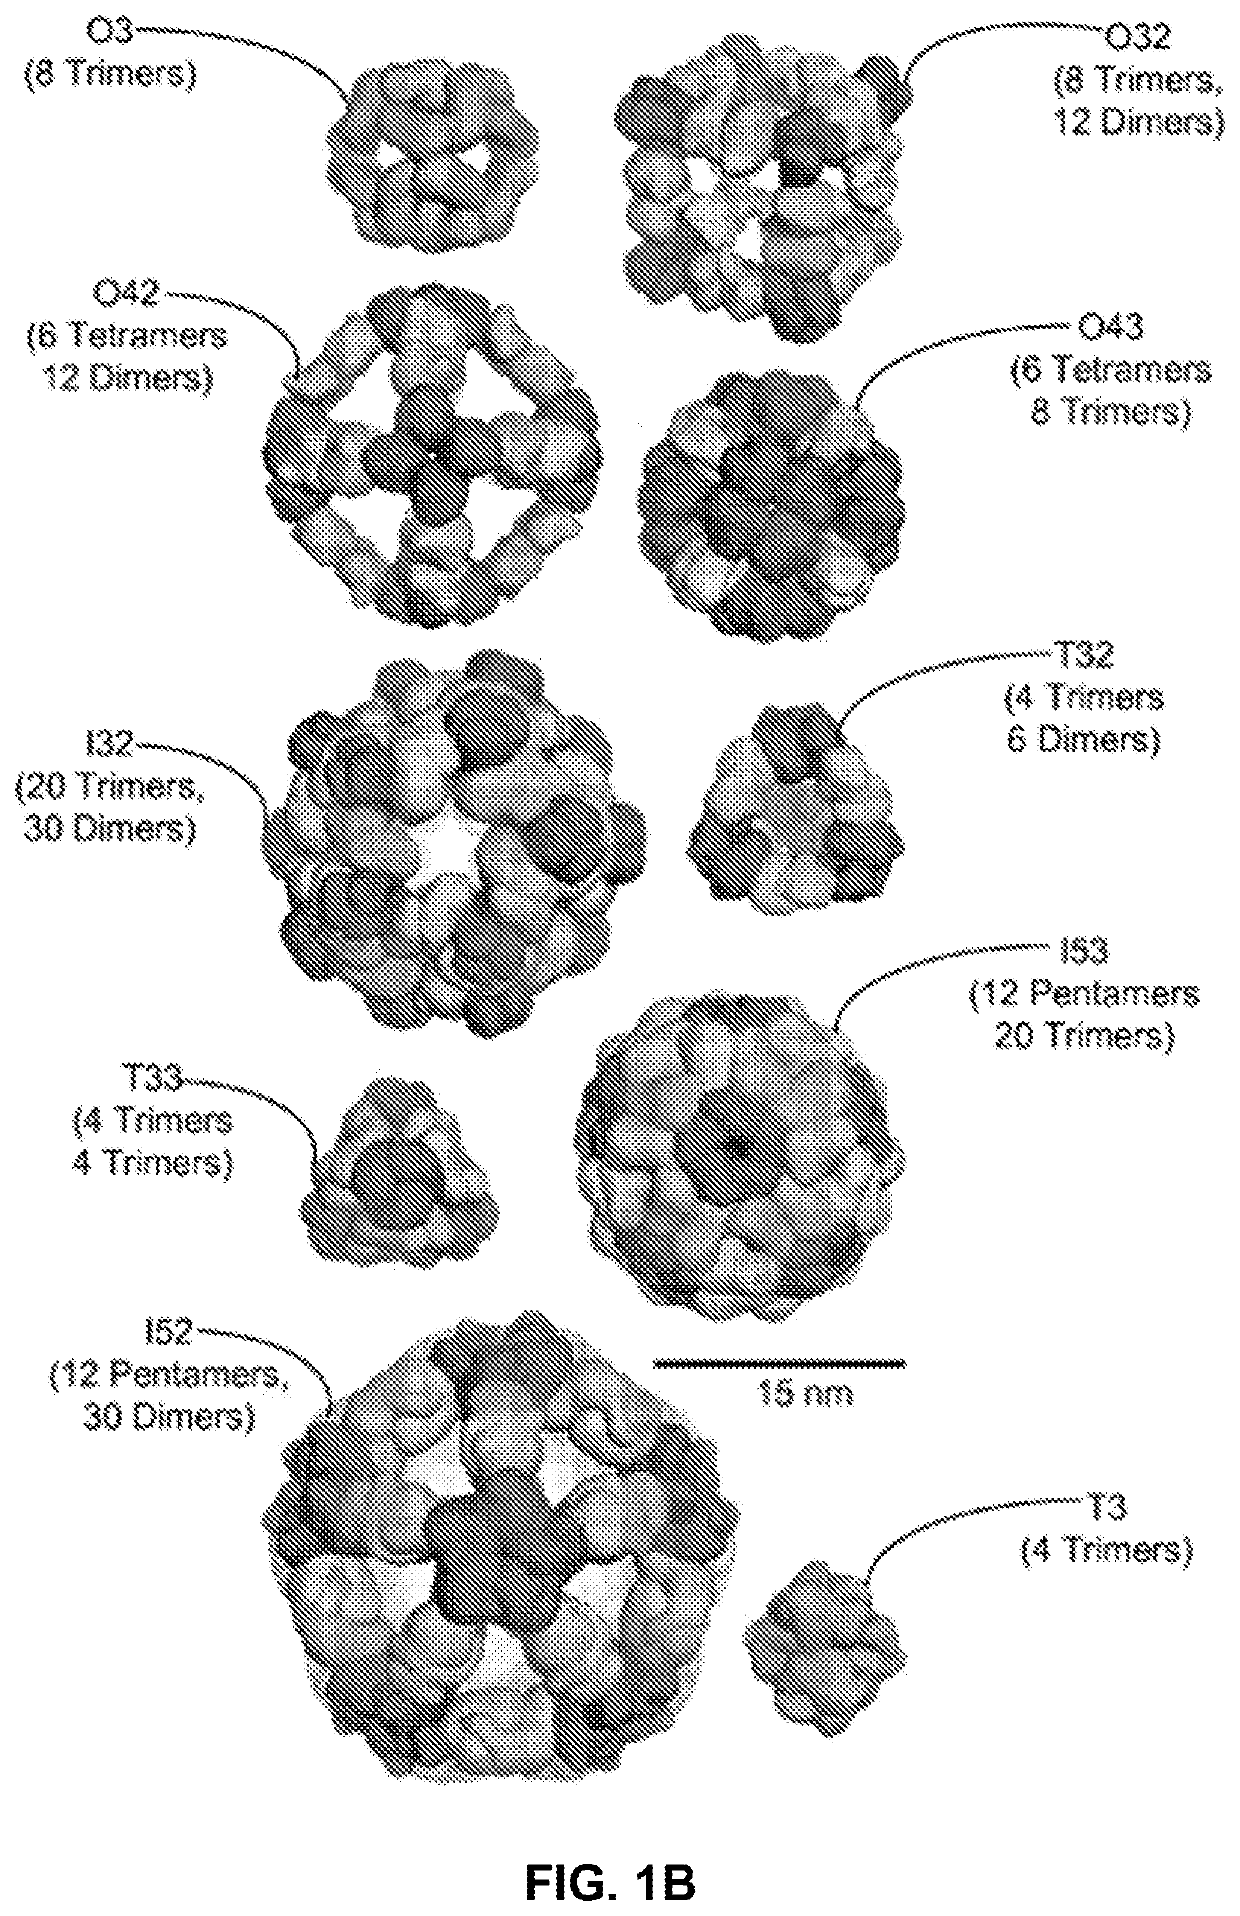 Self-asssembling nanostructure vaccines